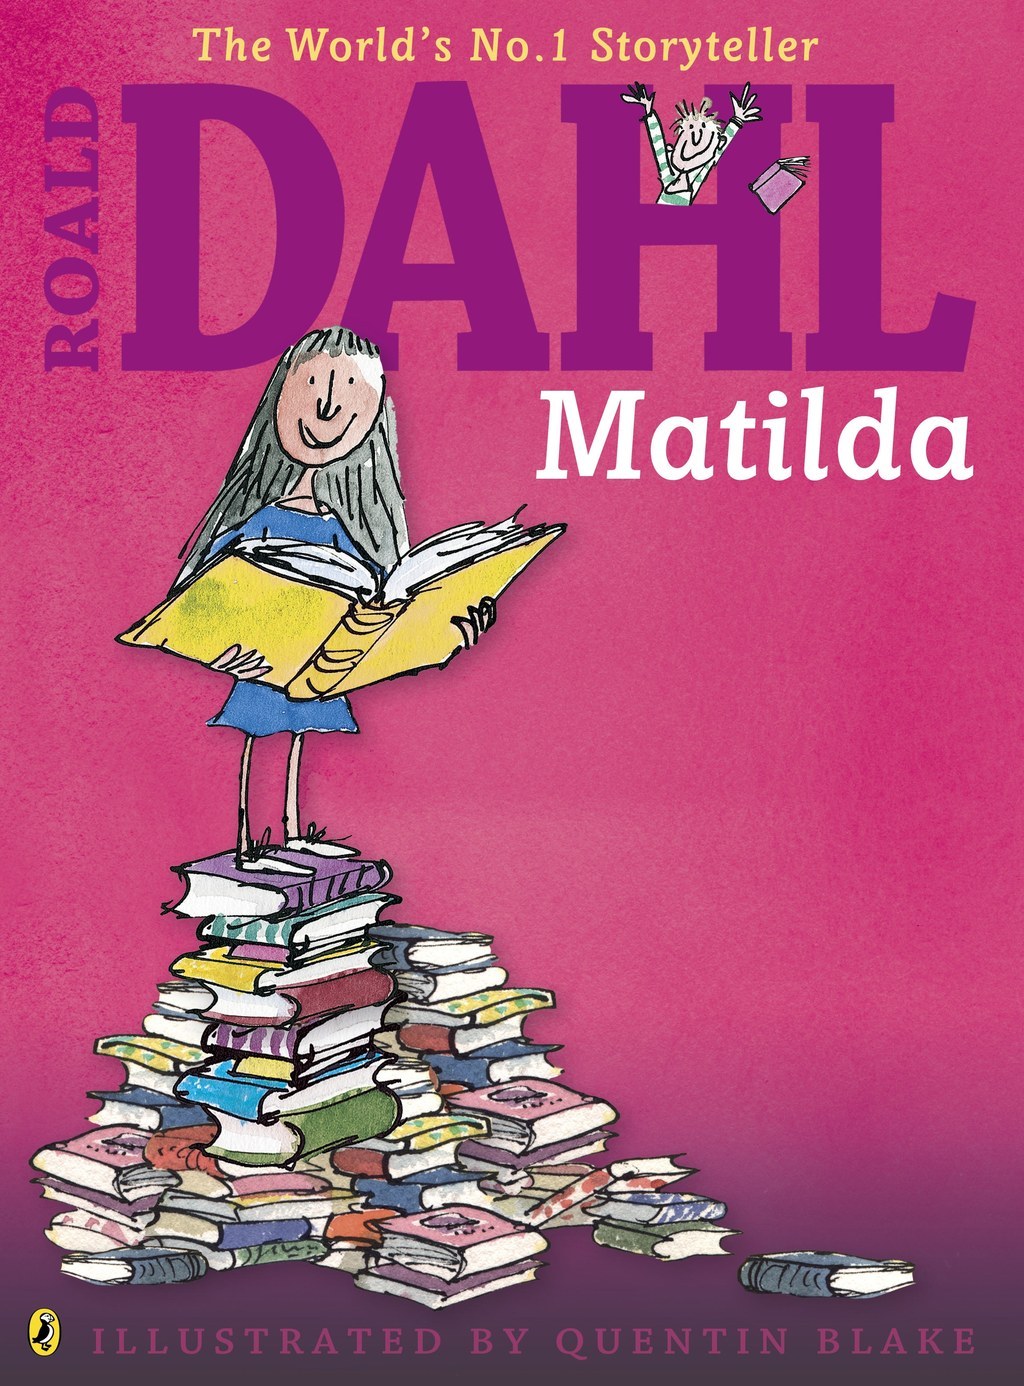 Roald dahl s matilda. Matilda by Roald Dahl.